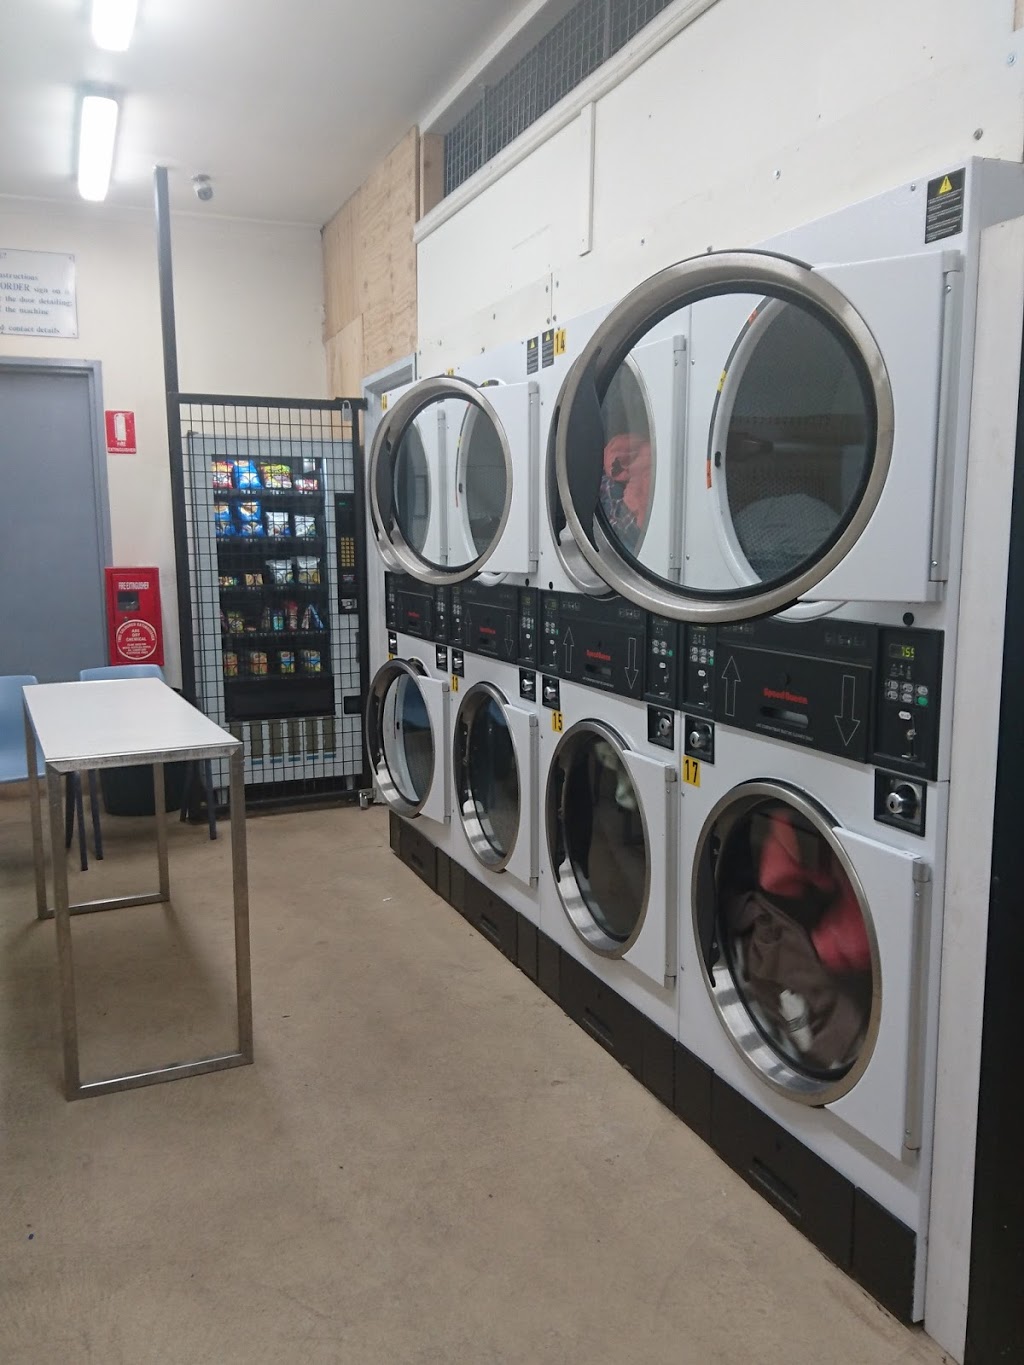 Coin Laundry | 121 Kangaroo Rd, Hughesdale VIC 3166, Australia